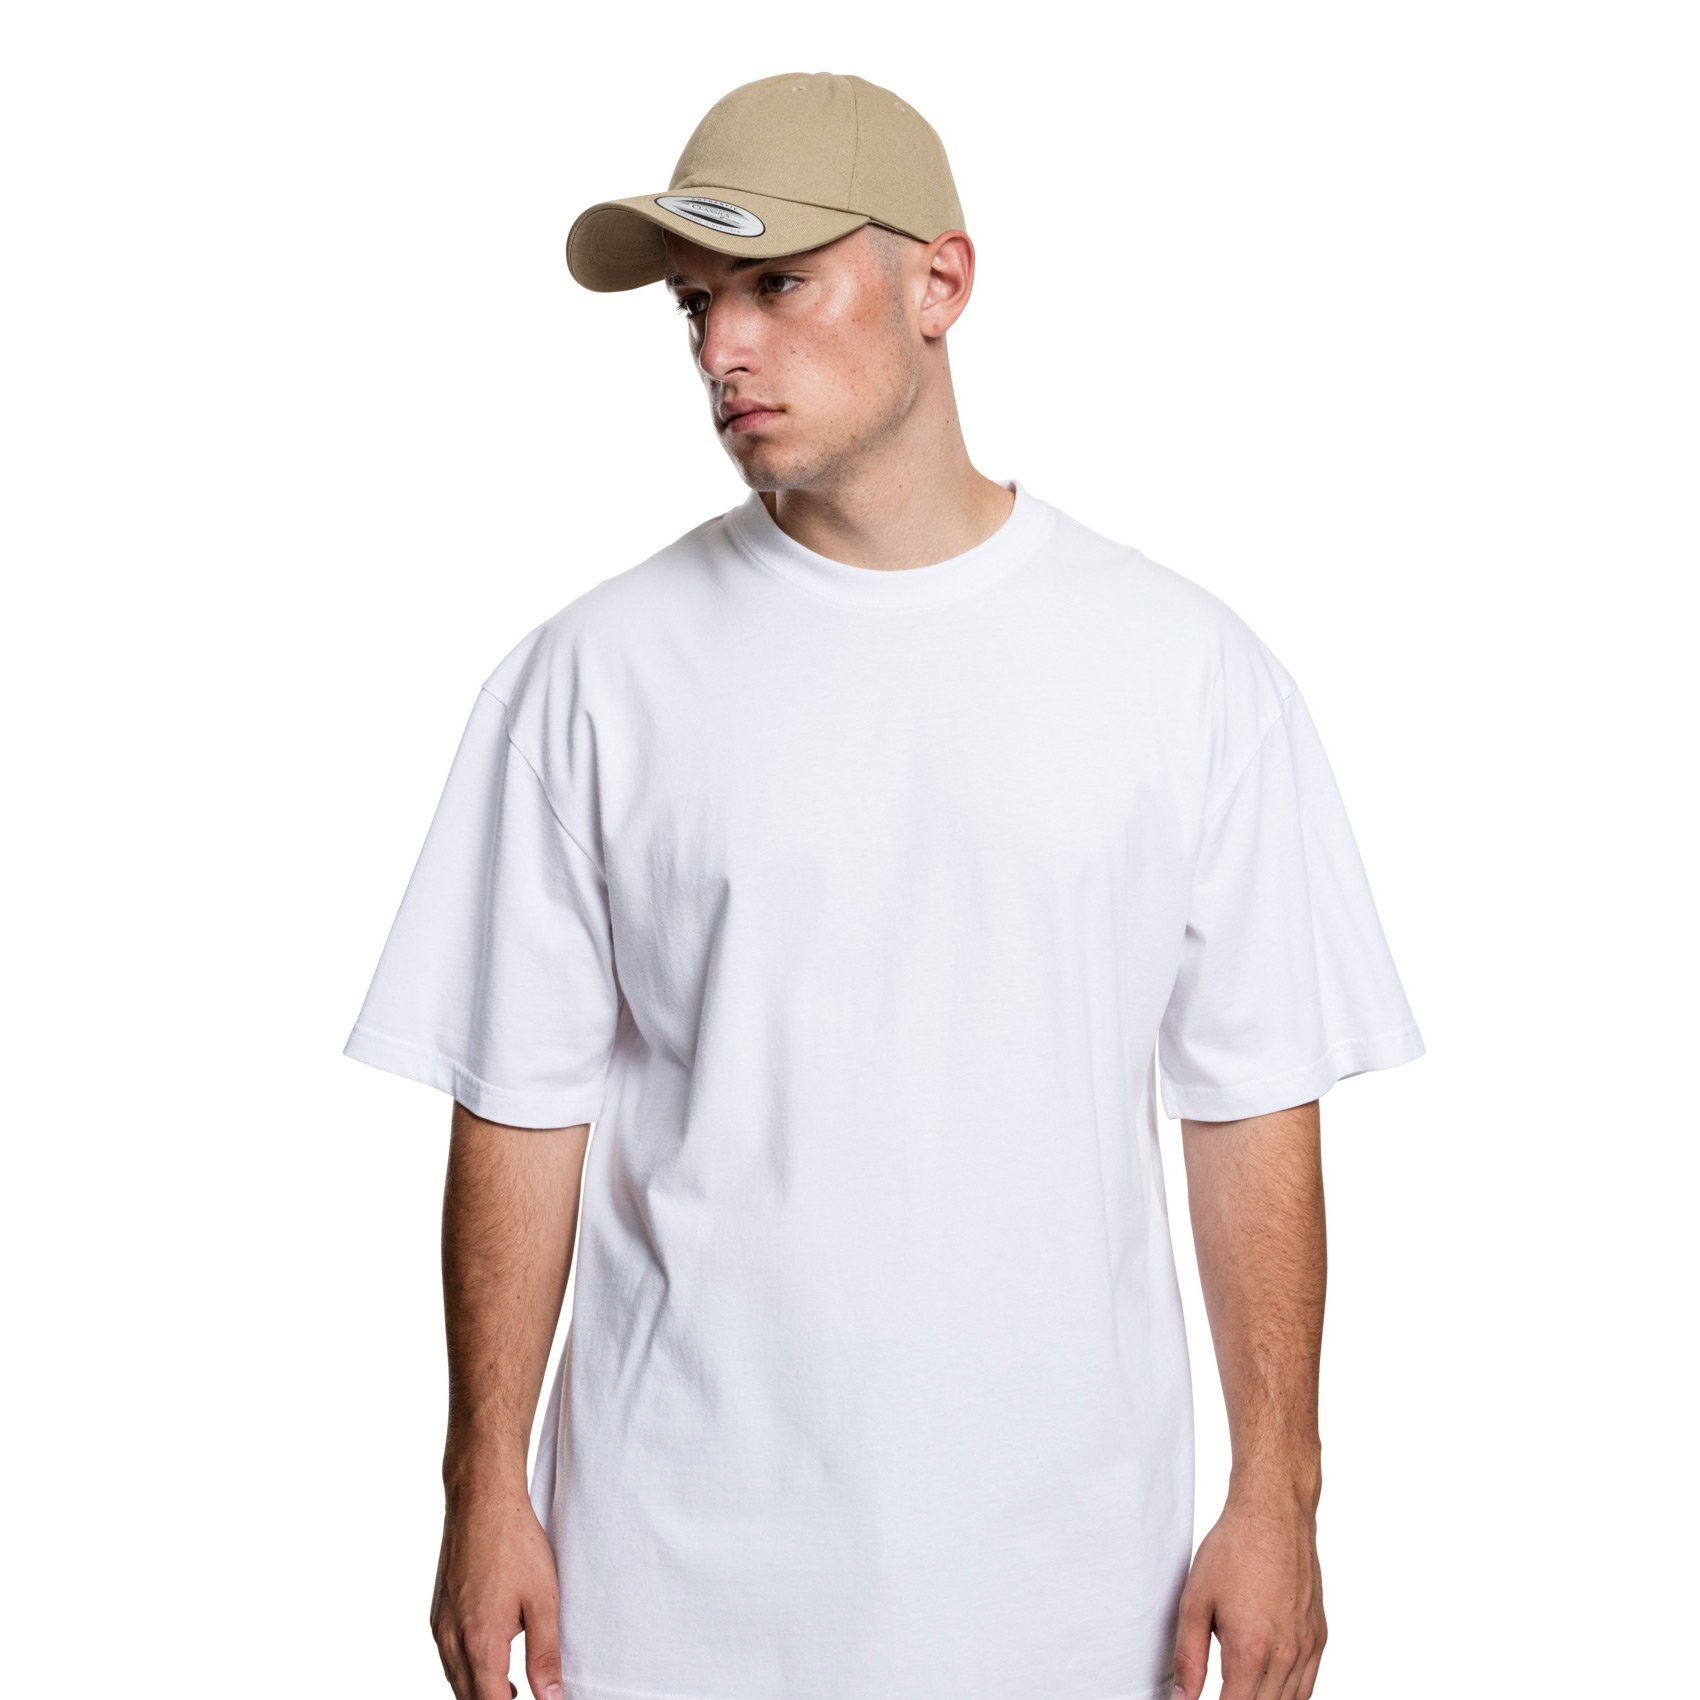 Flexfit Baseball Cap Profile Cotton khaki Twill - Low